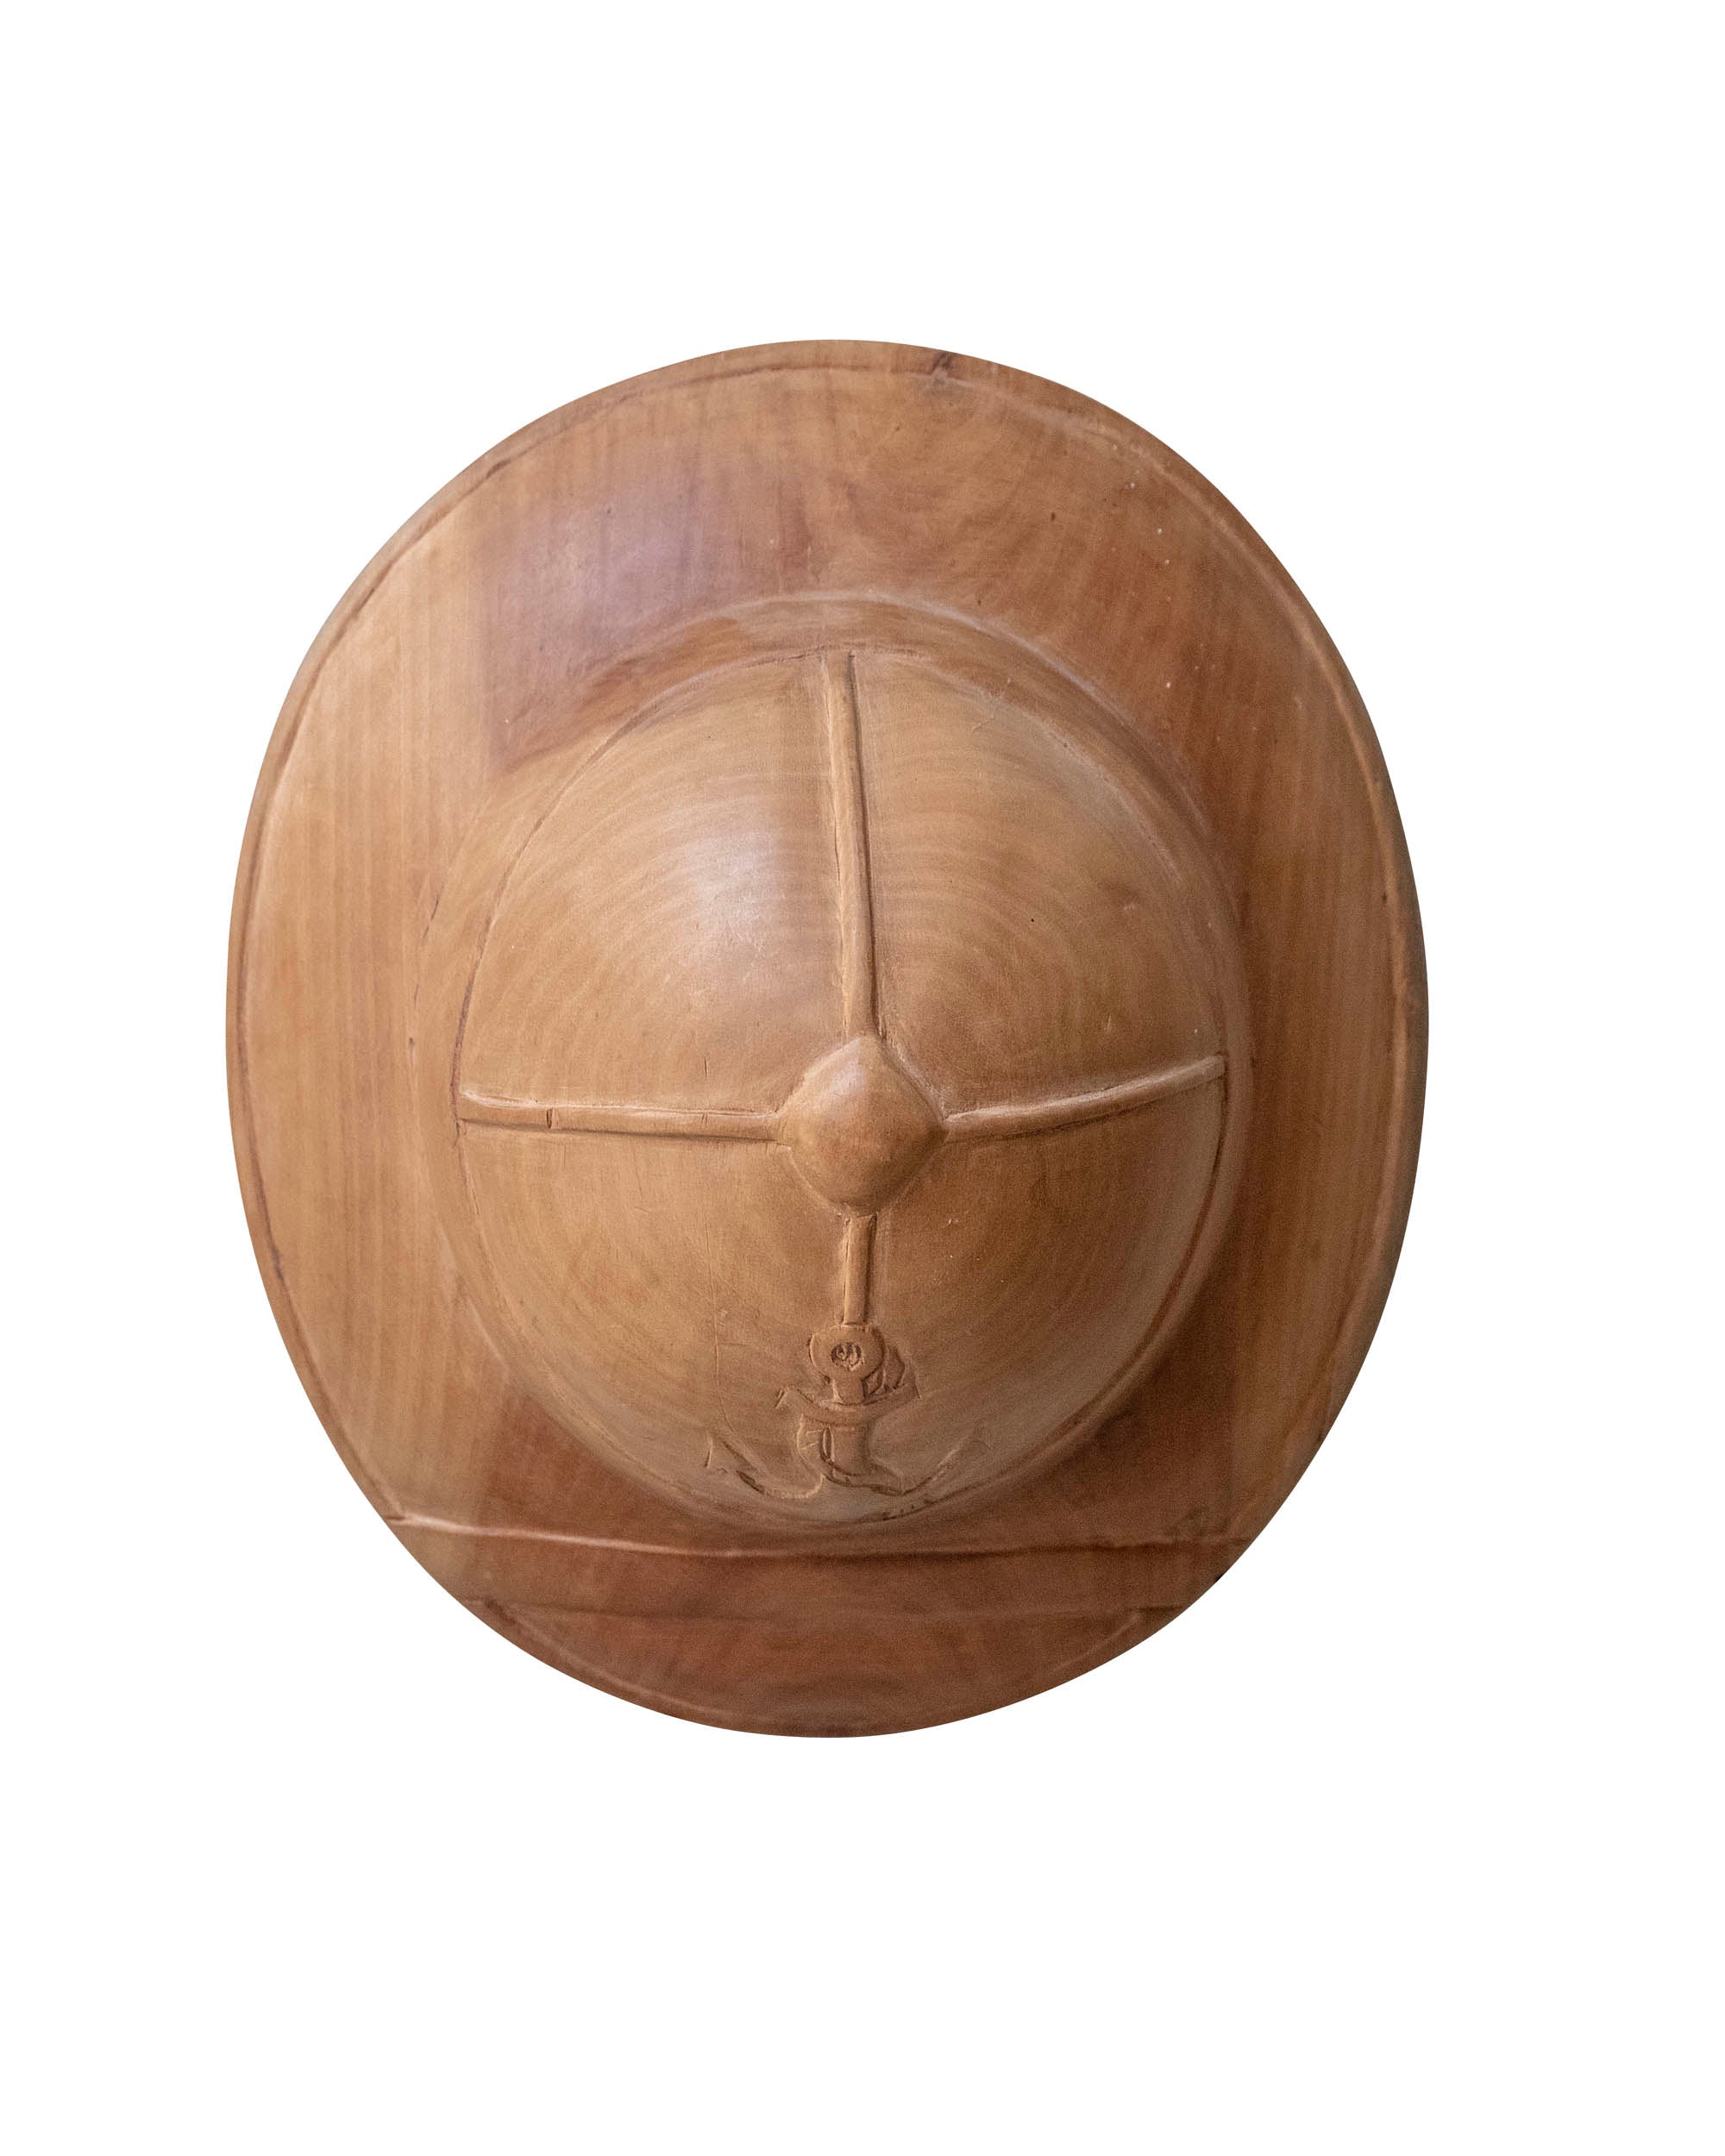 Wooden helmet with hand-carved marine emblem